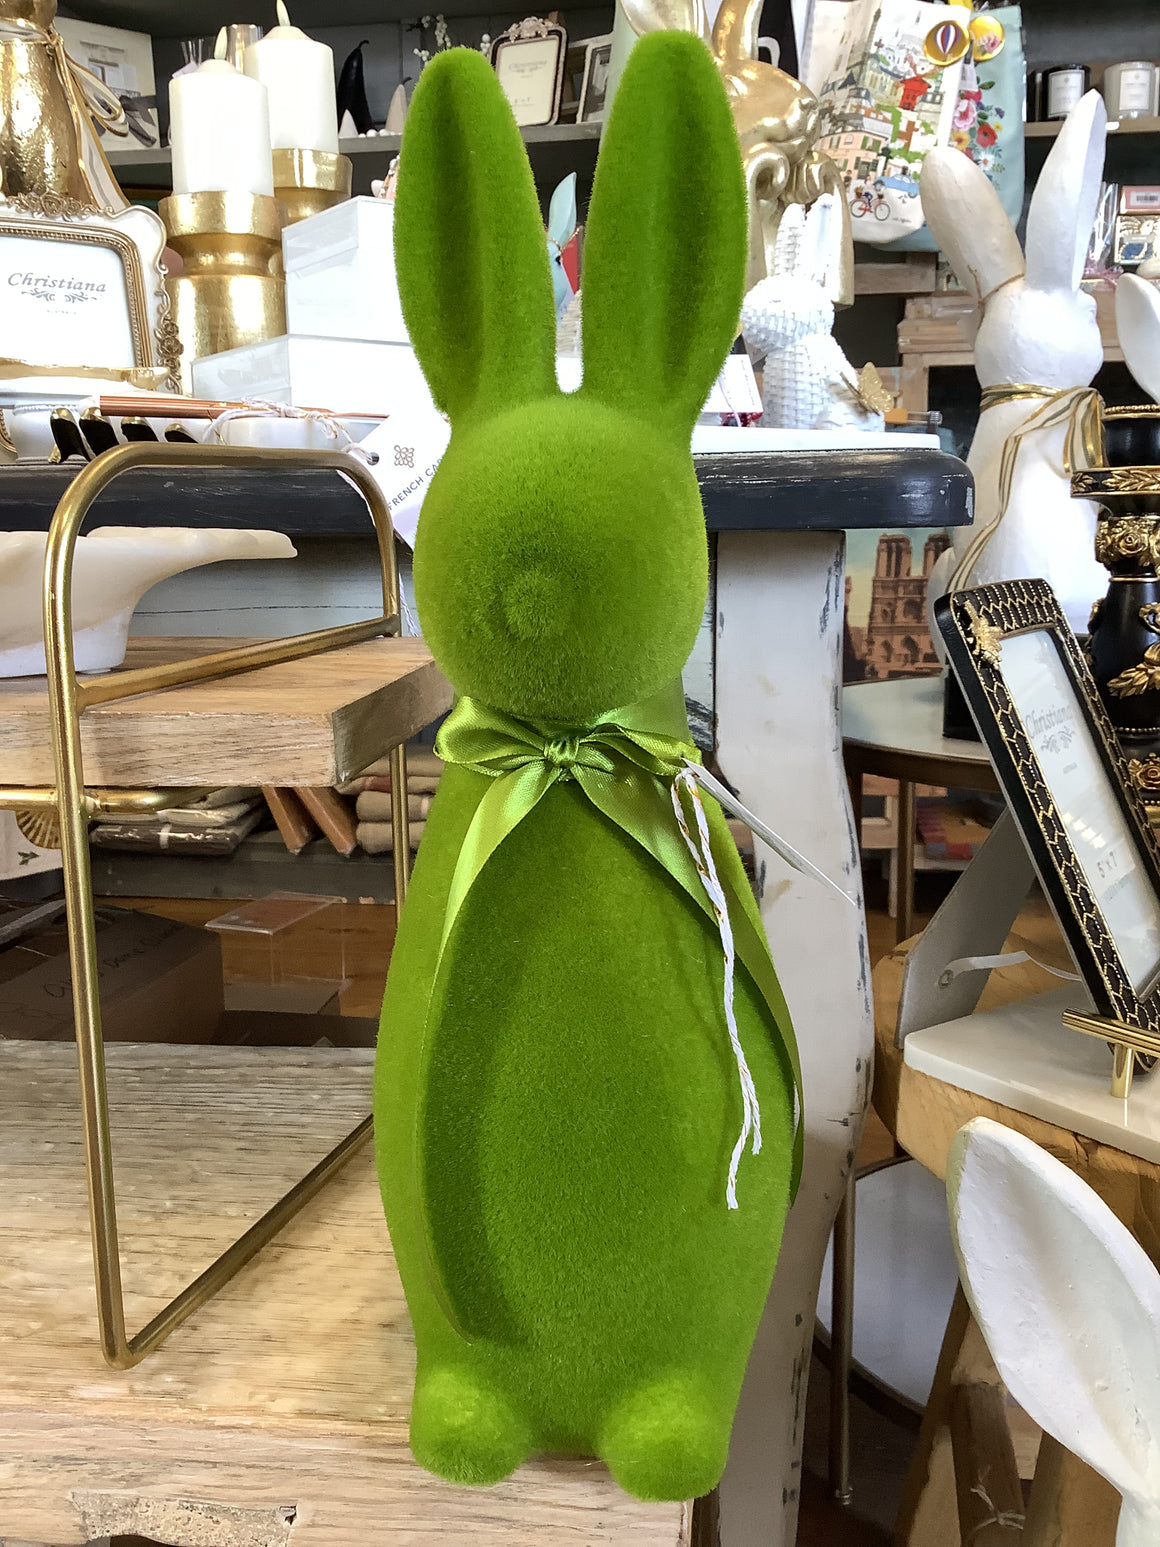 Large Flocked Green Rabbit Ornament